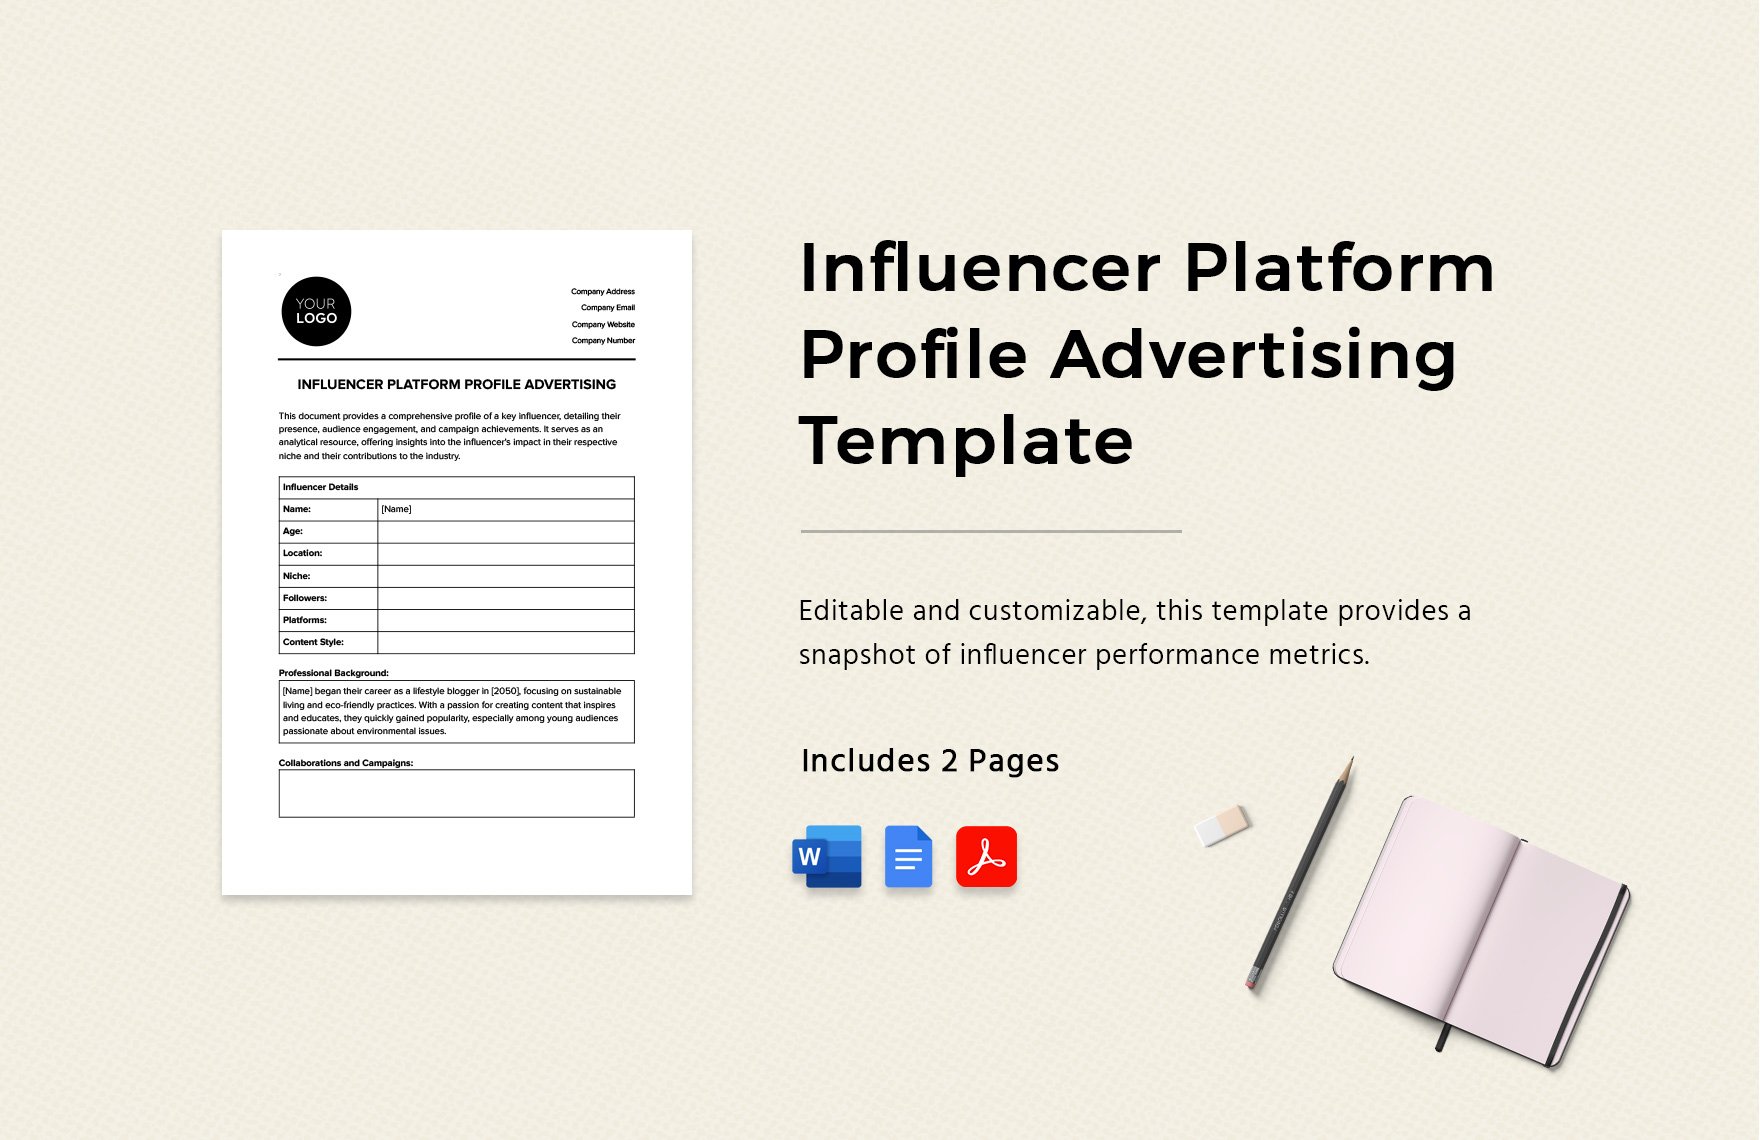 Influencer Platform Profile Advertising Template